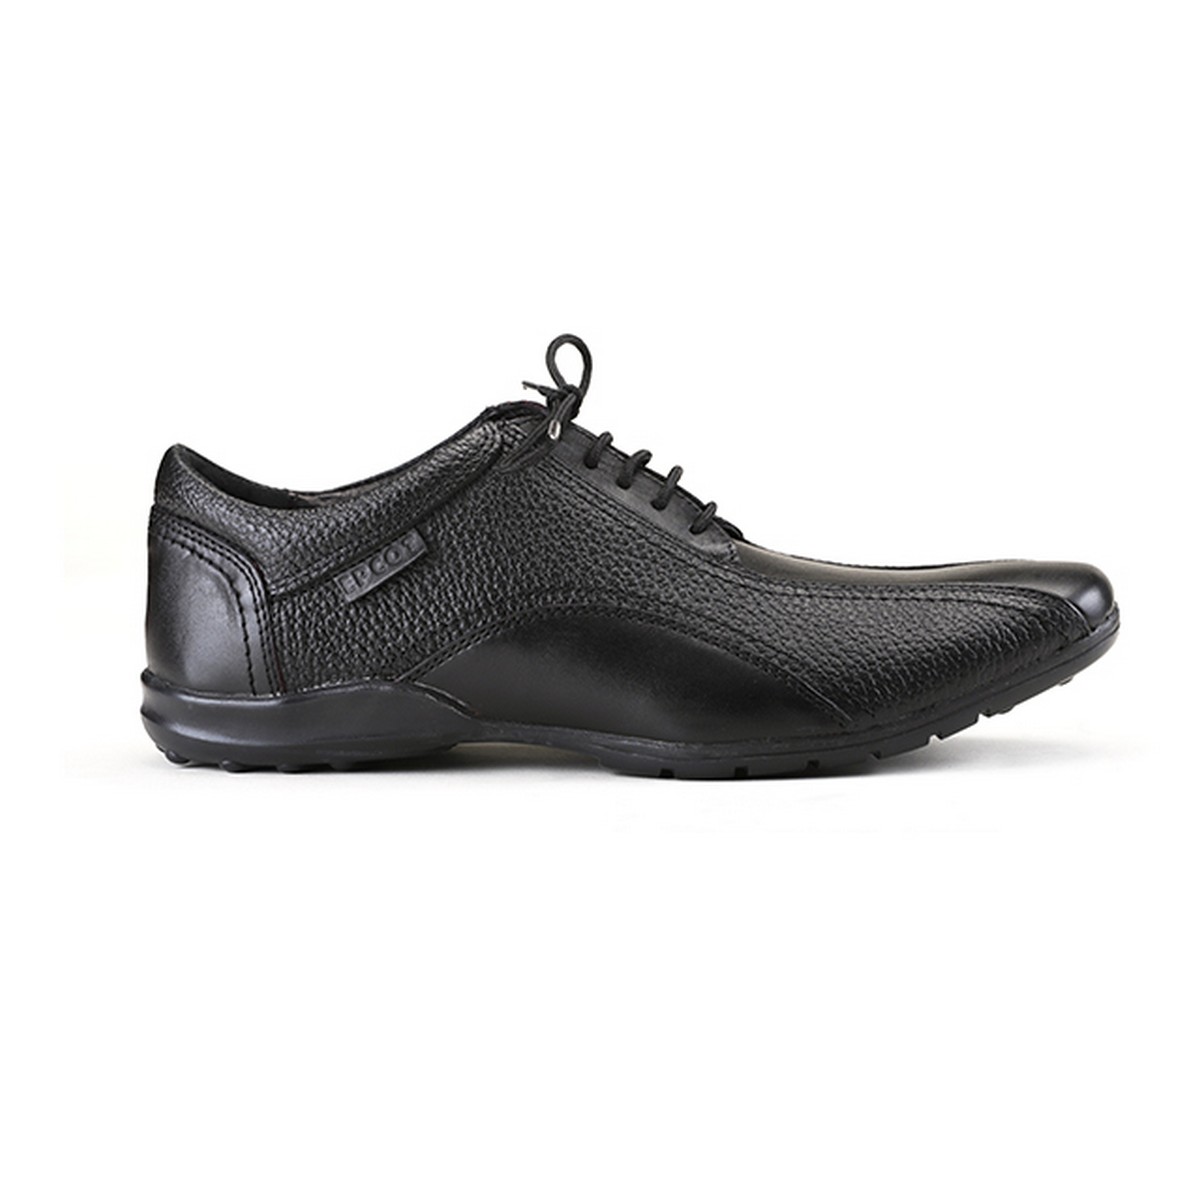 Epcot Falcon Black Leather Sneakers Shoes For Men- Calgary Falcon Black